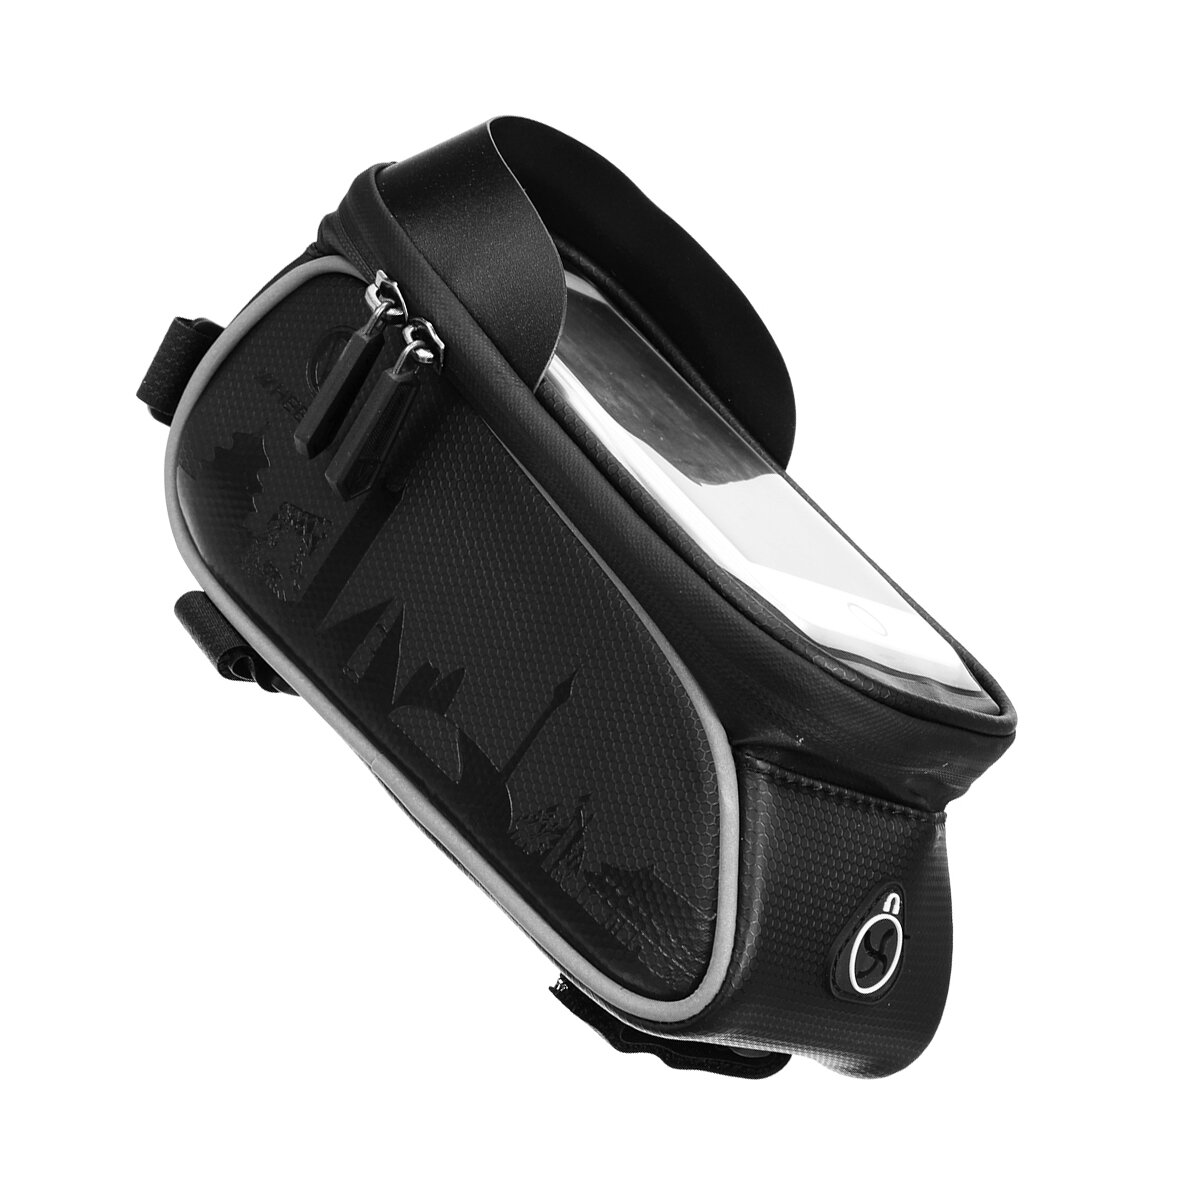 Wheelup 6.5 inch Waterdichte Fietstas Touchscreen MTB Racefiets Bovenbuis Frame Stuurtas Fietsen Pou